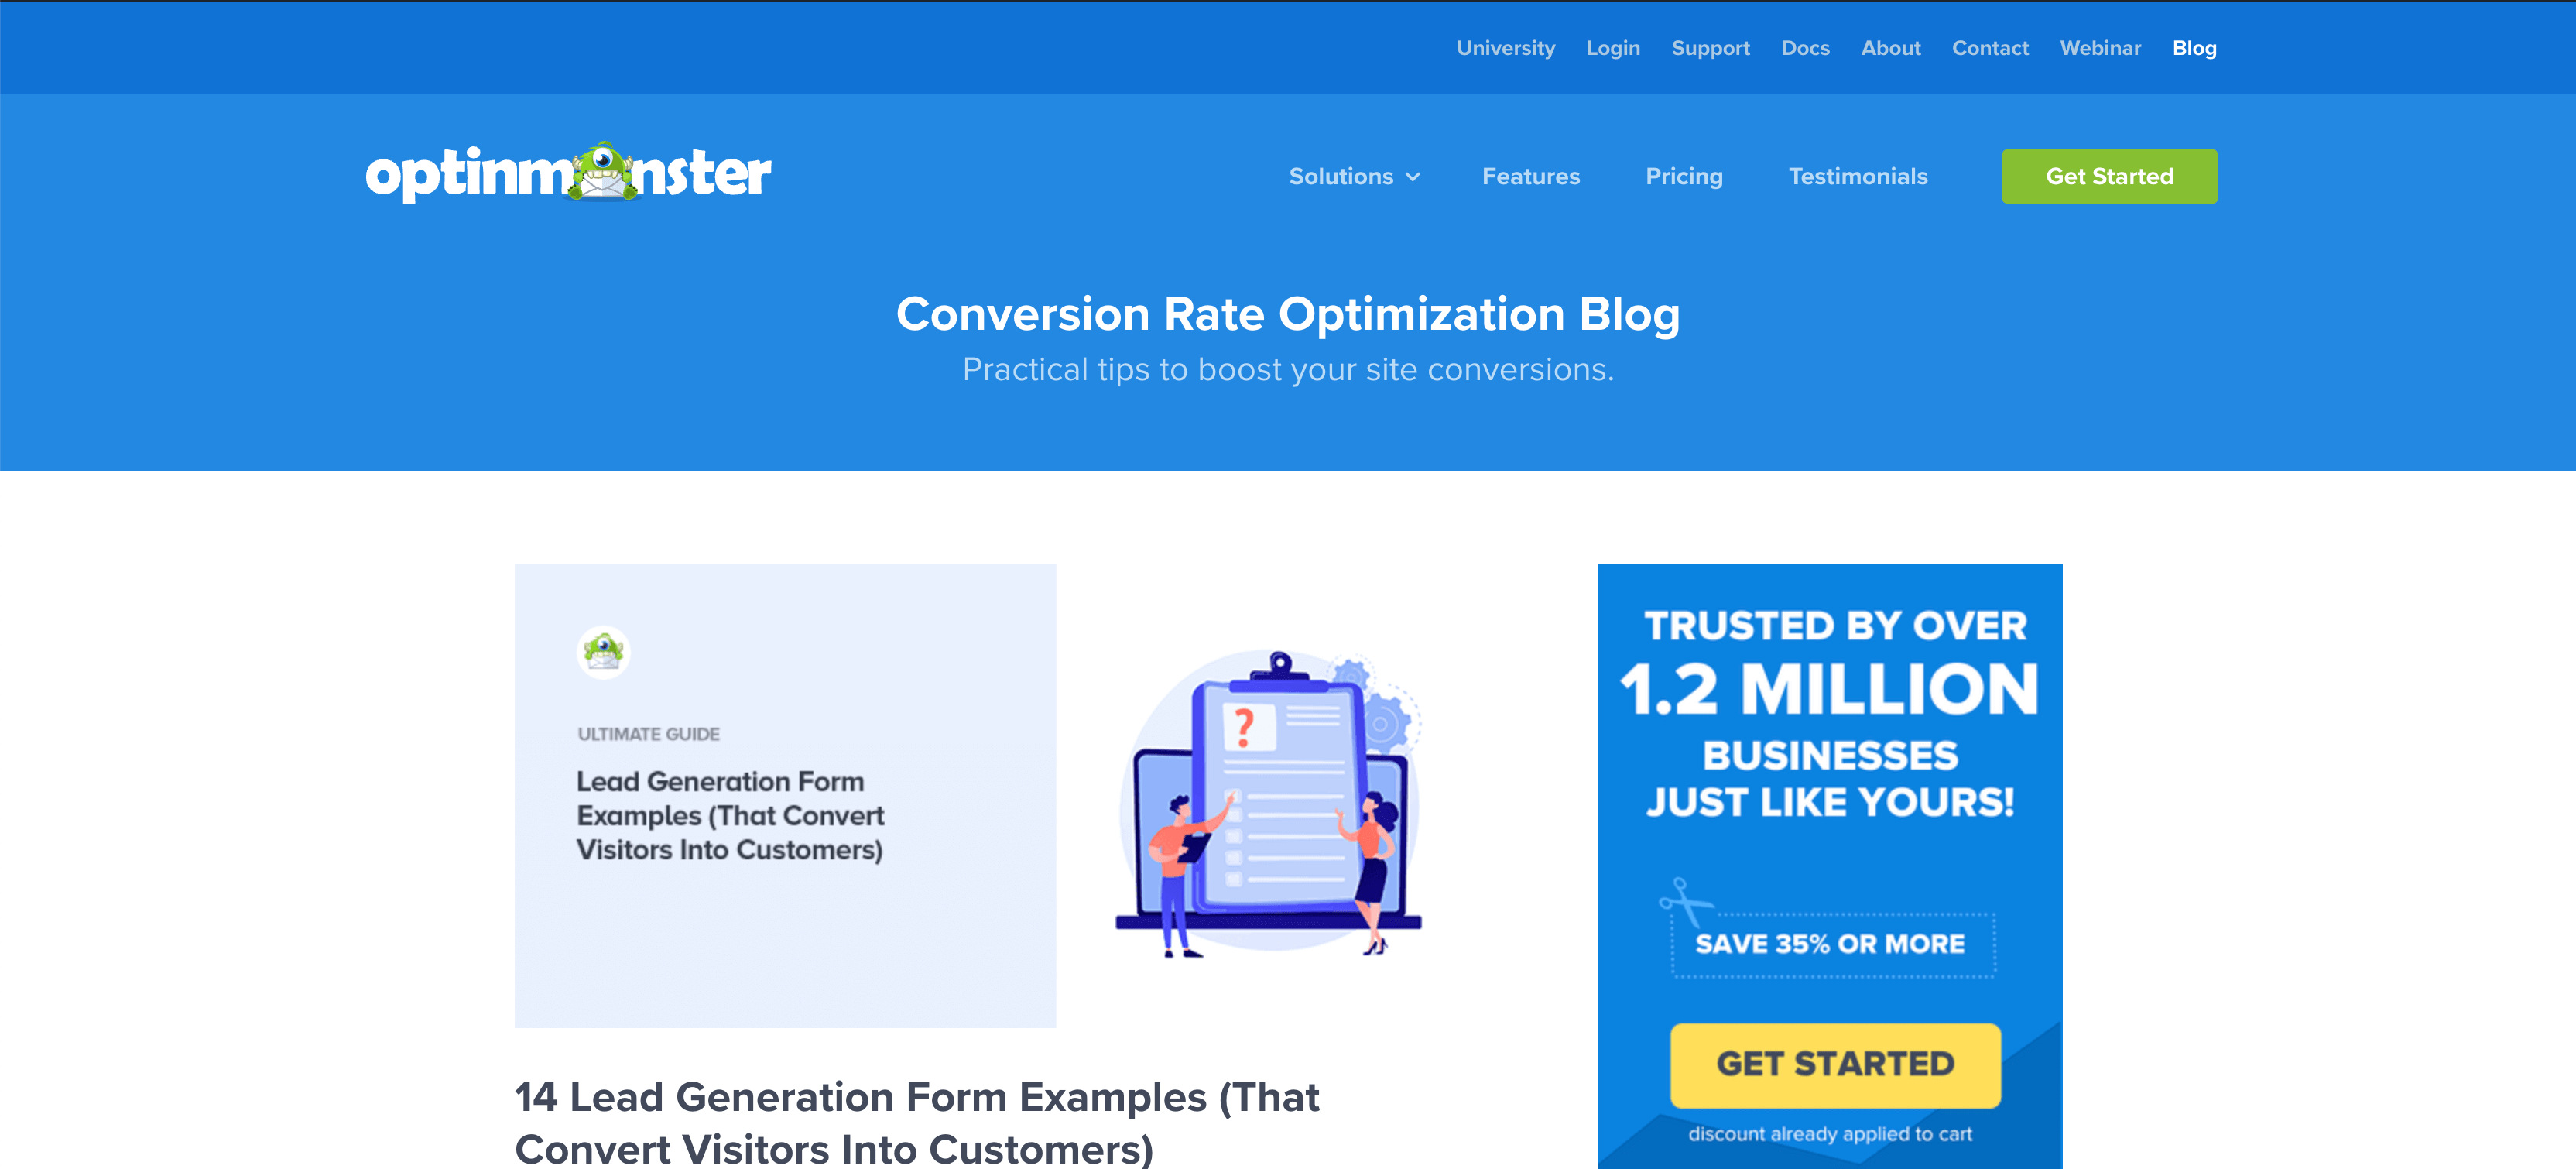 OptinMonster Blog Content Marketing Example